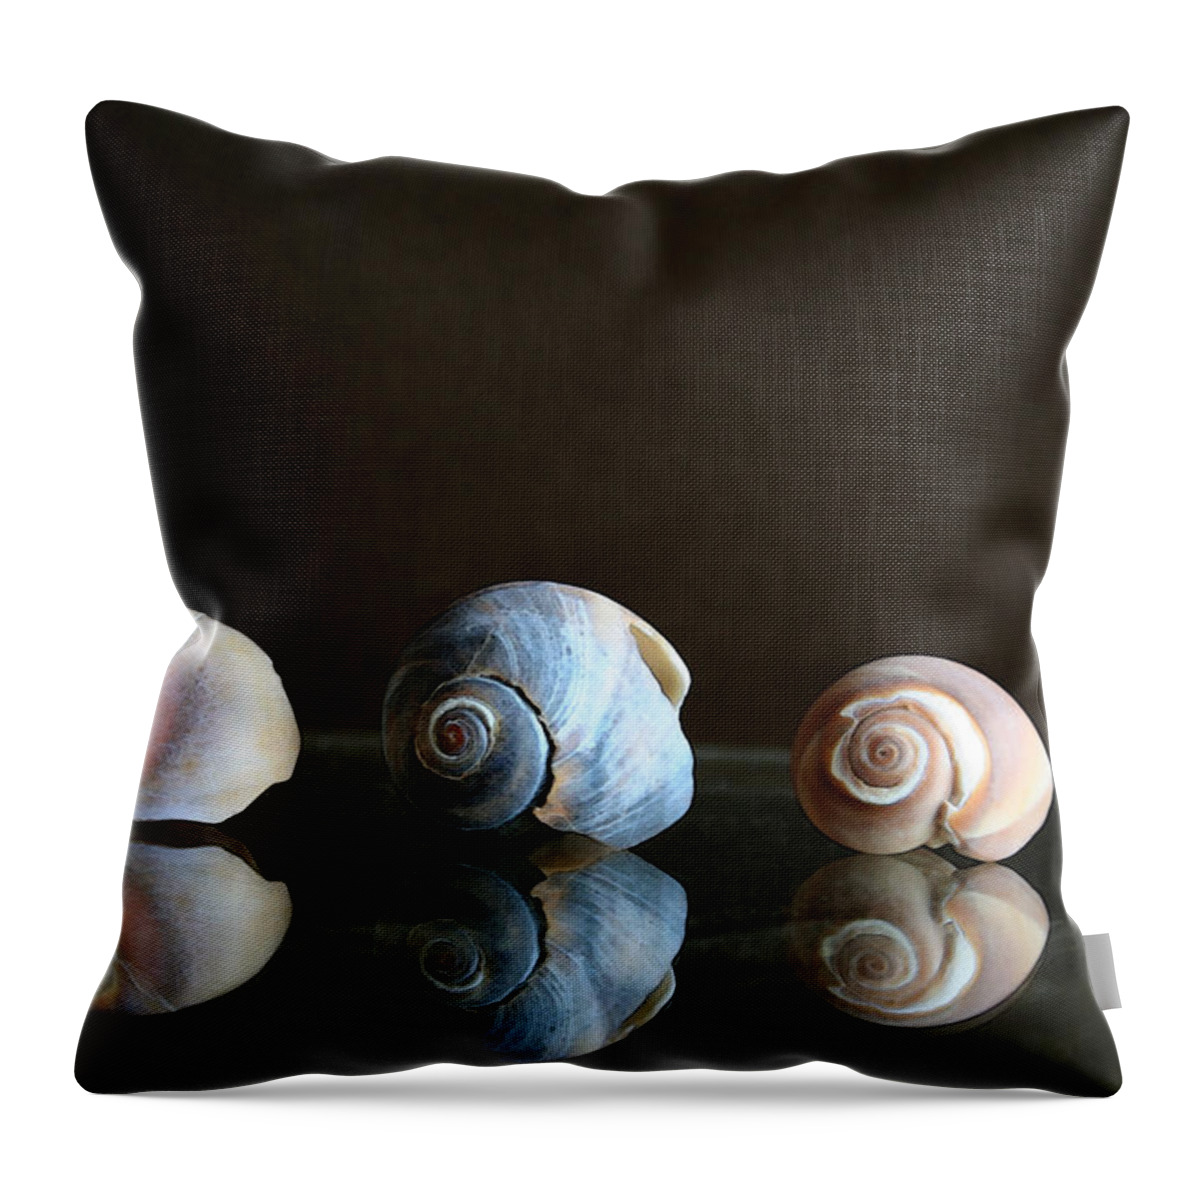 Seashells Throw Pillow featuring the photograph Sea snails by Linda Sannuti